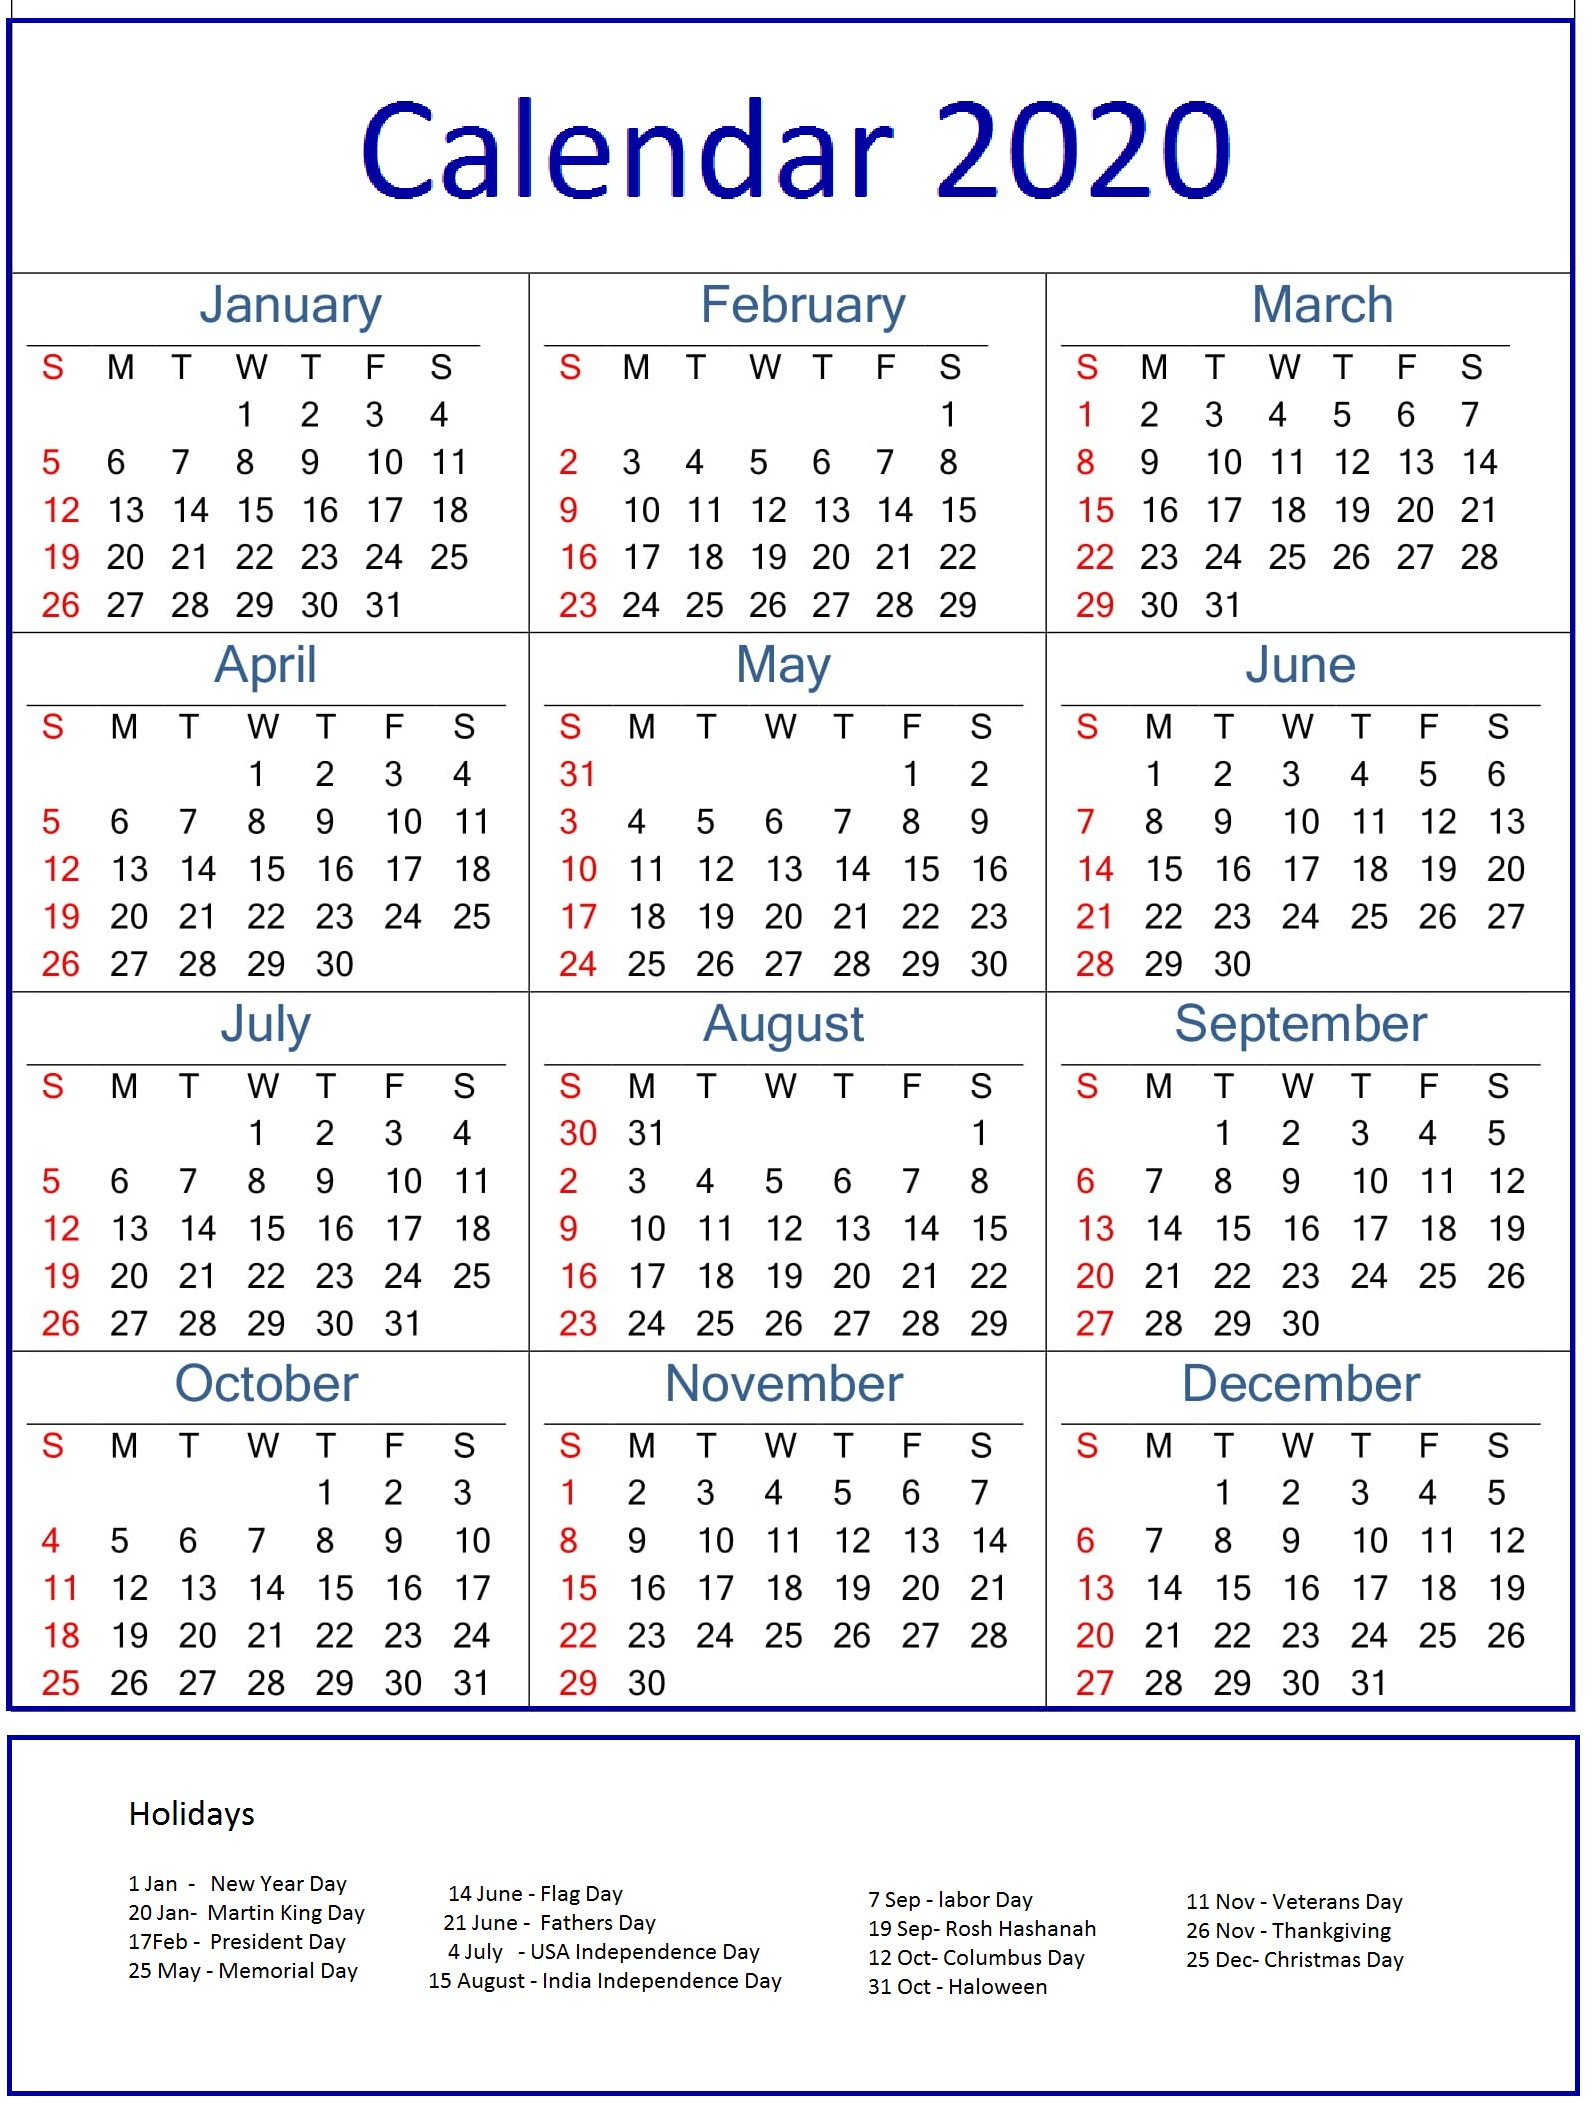 Monthly Calendar Holidays 2020 | Calendar Ideas Design Creative